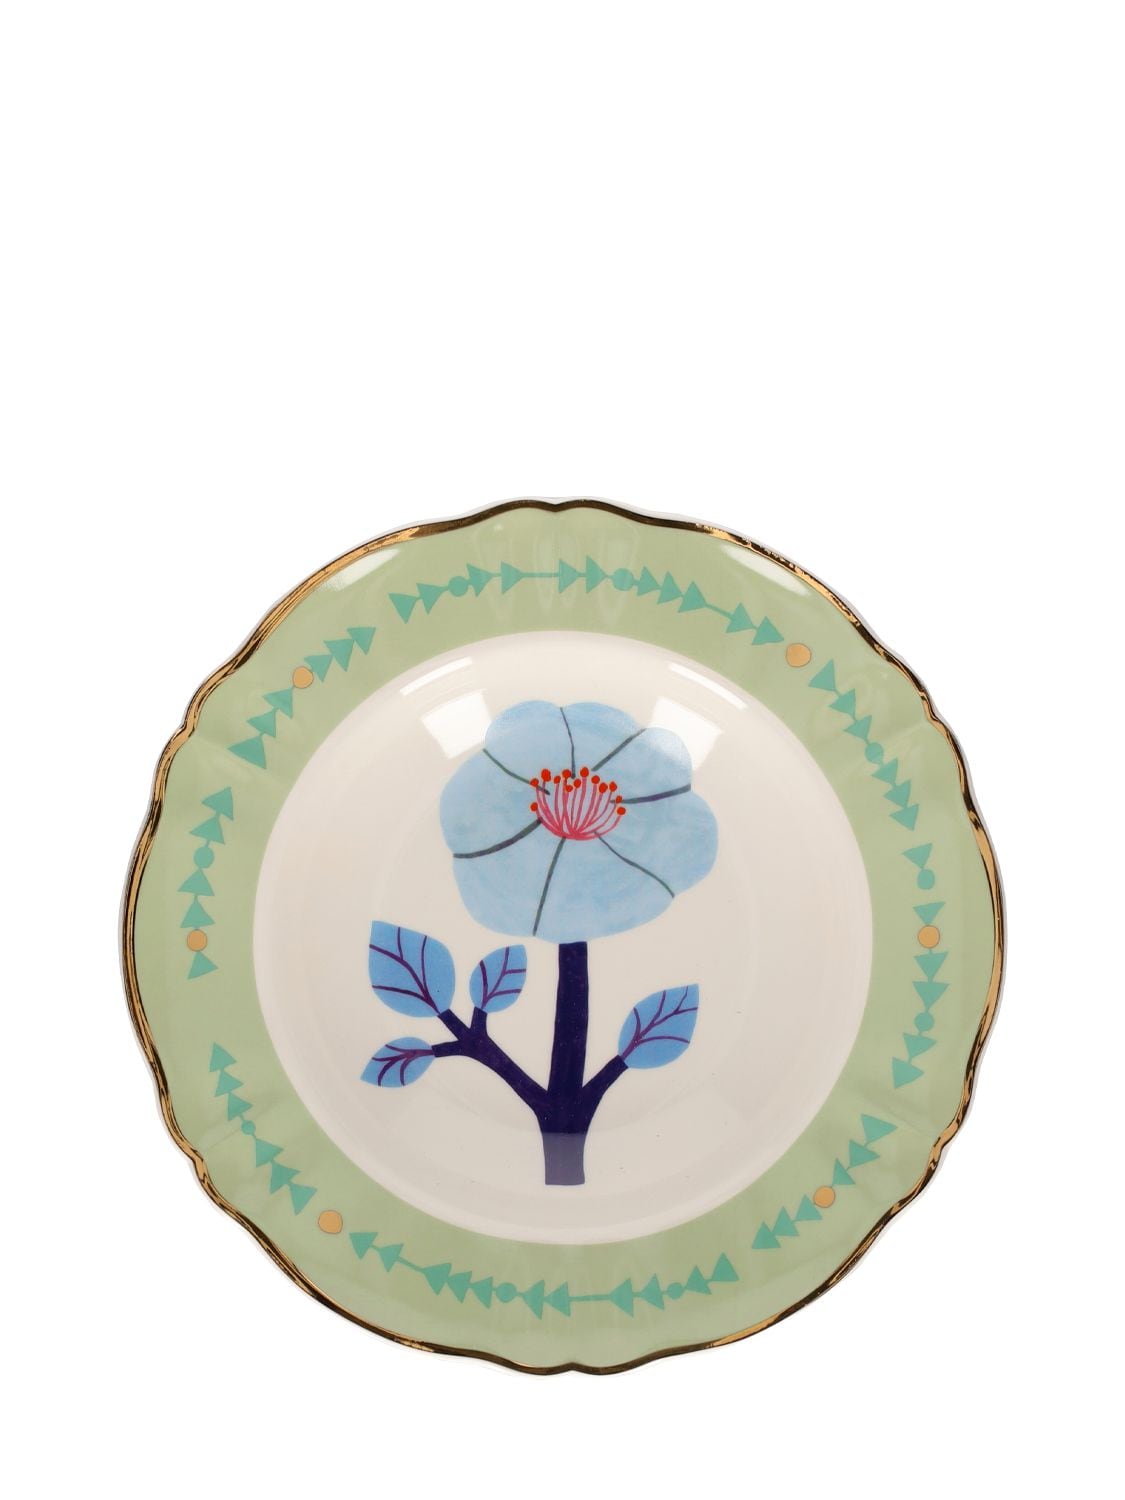 Image of Botanica Plate